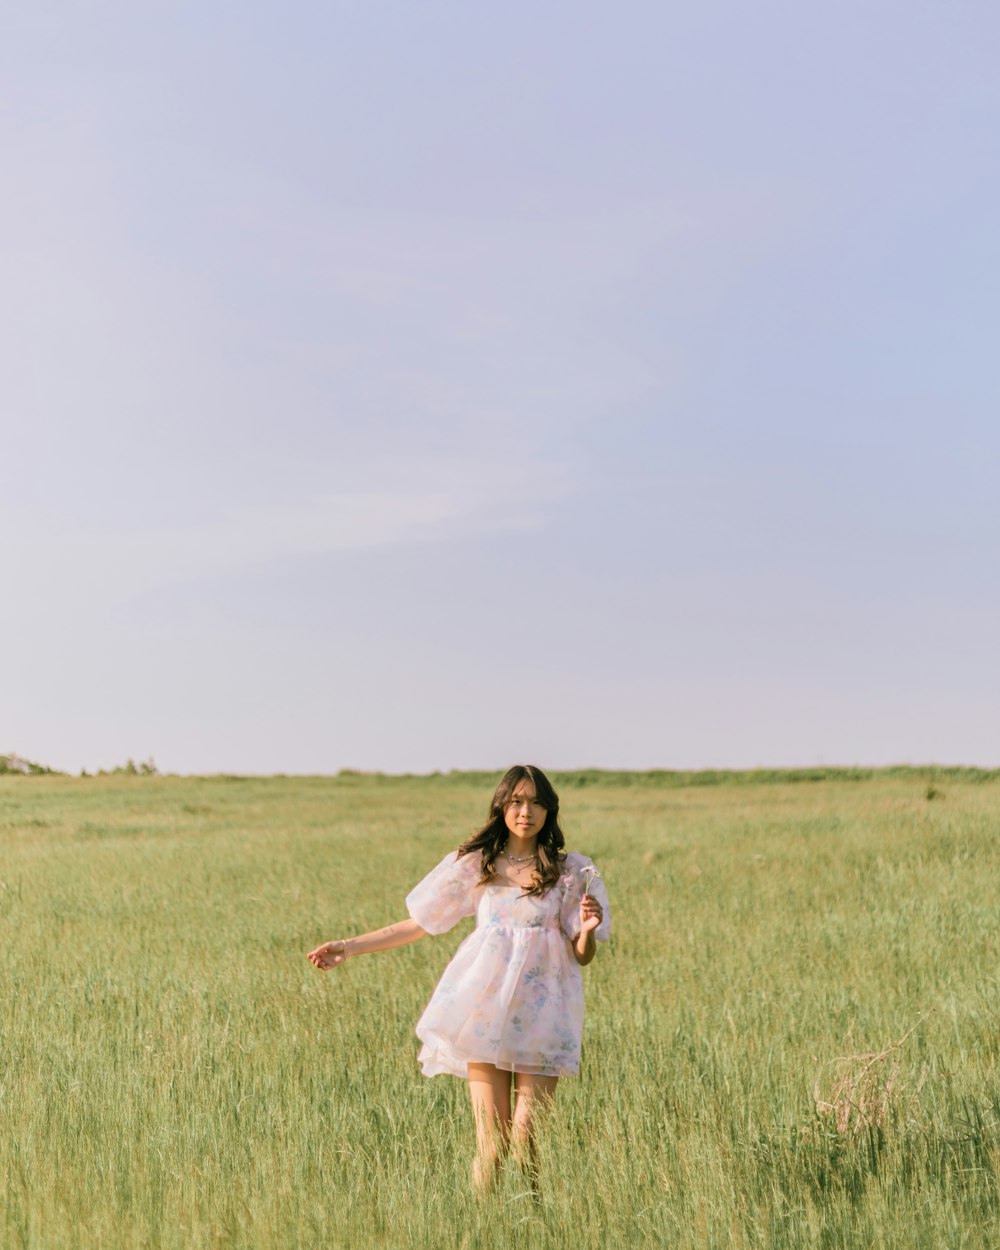 a person in a dress walking through a field